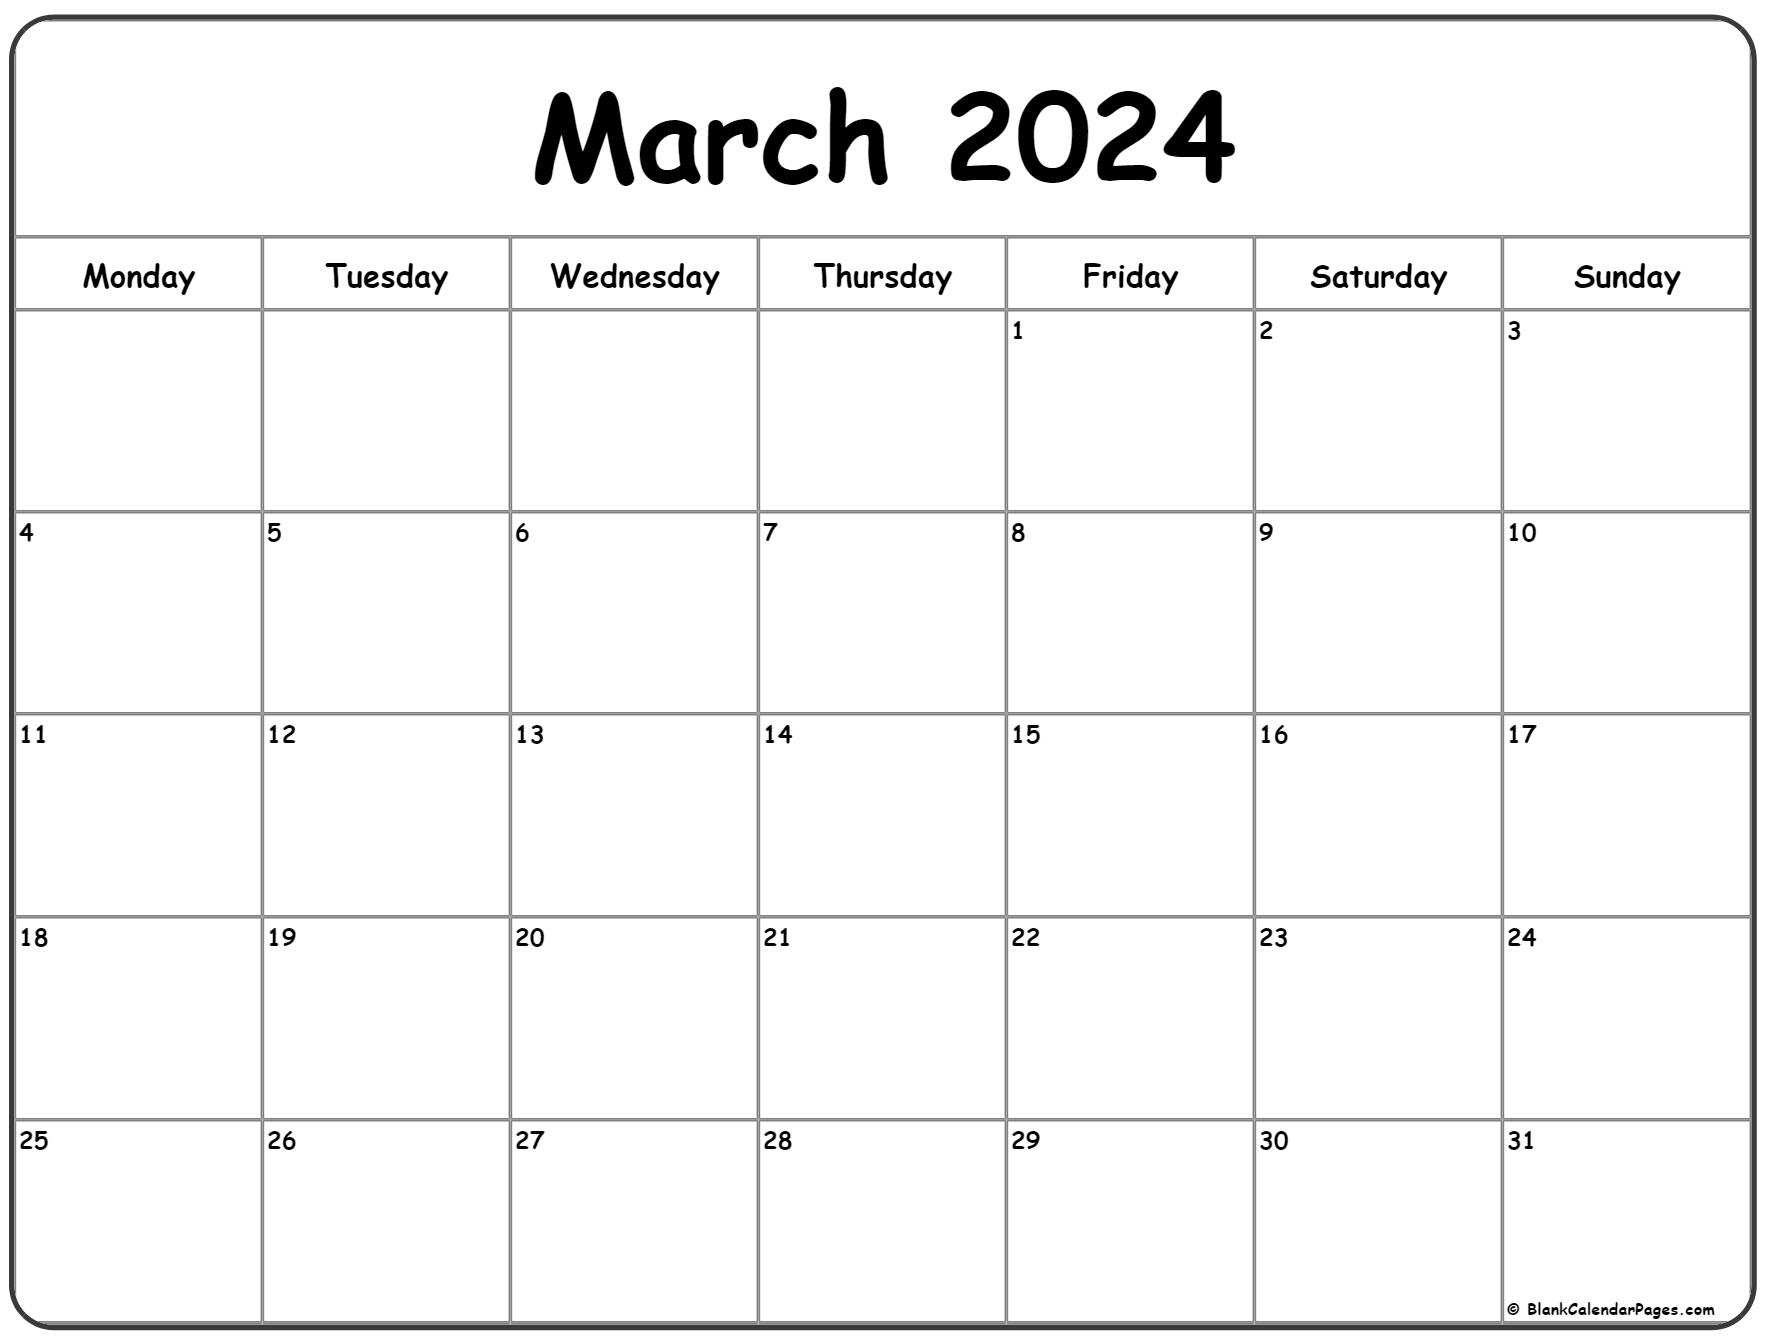 March 2024 Monday Calendar | Monday To Sunday for March Printable Calendar 2024